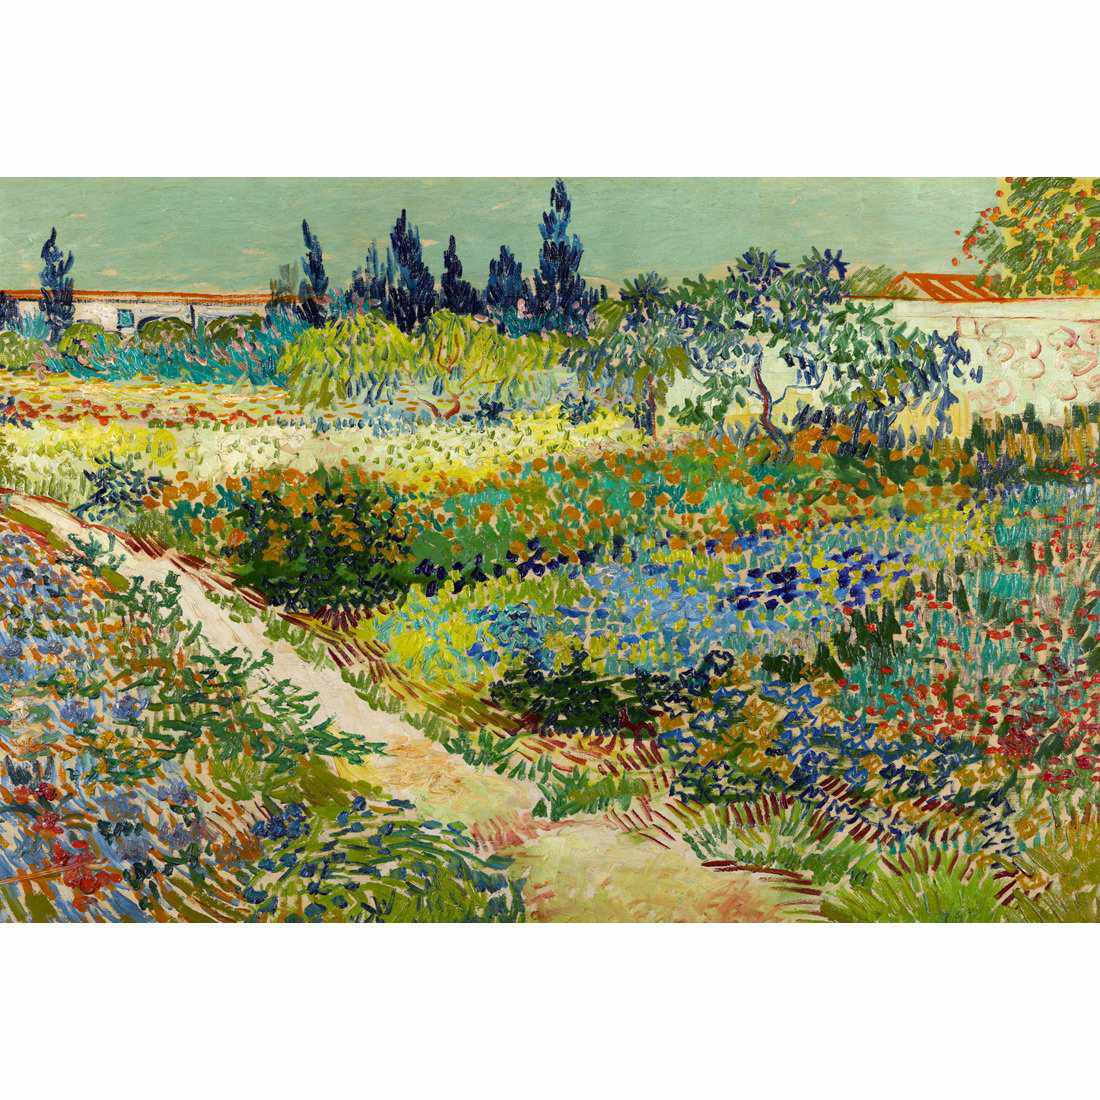 Garden At Arles - Van Gogh Canvas Art-Canvas-Wall Art Designs-45x30cm-Canvas - No Frame-Wall Art Designs